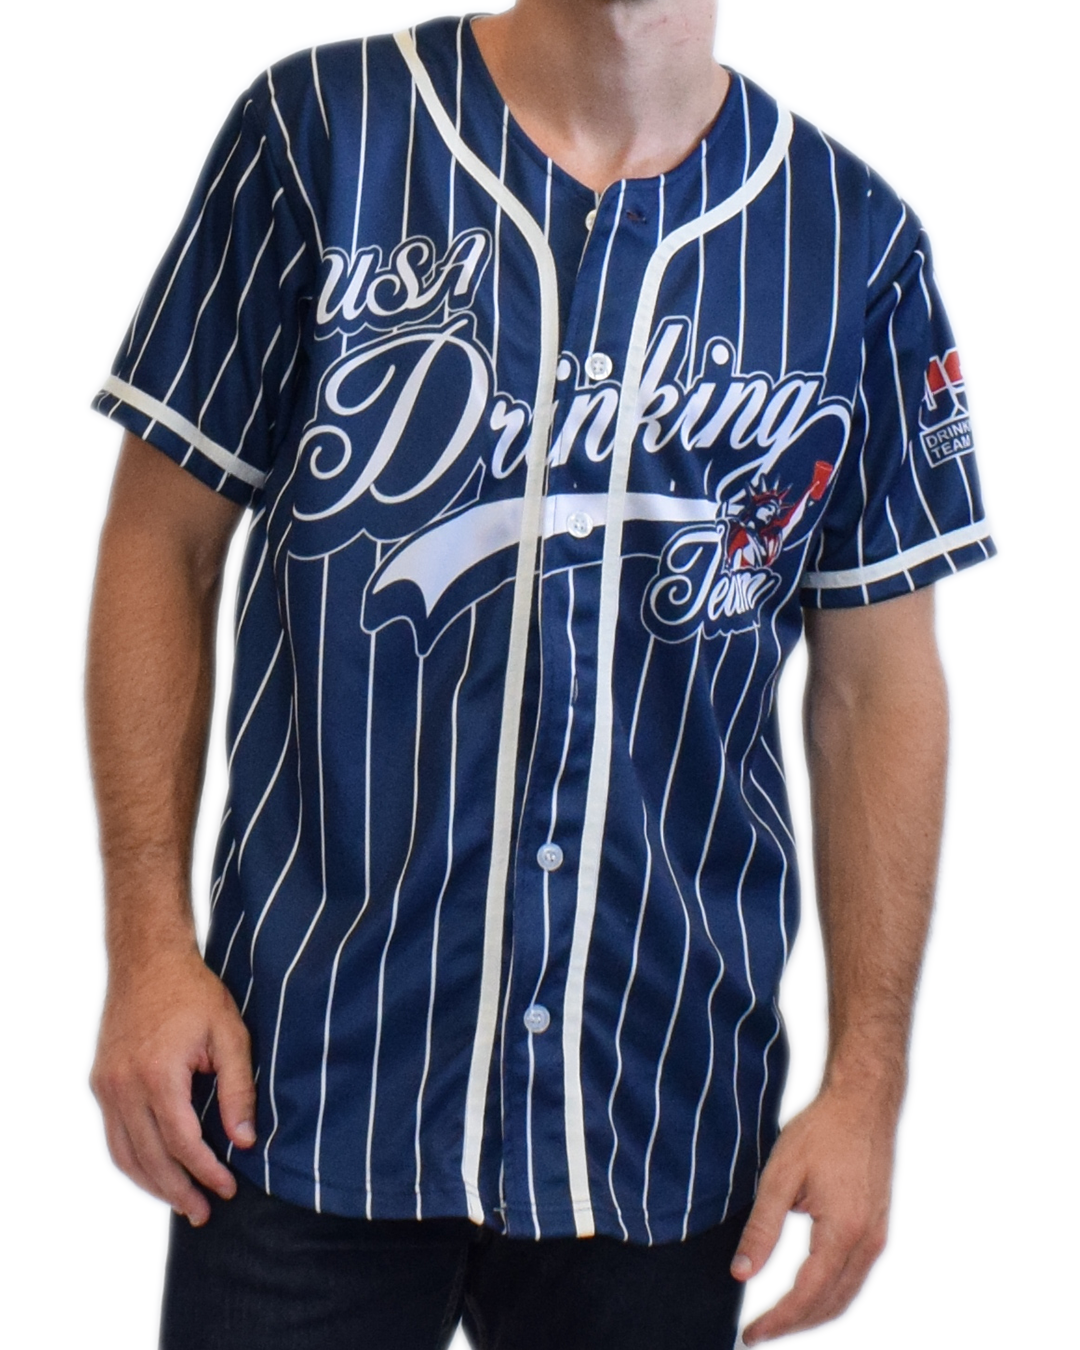 Baseball V-Neck Pullover Jersey w/Pinstripes